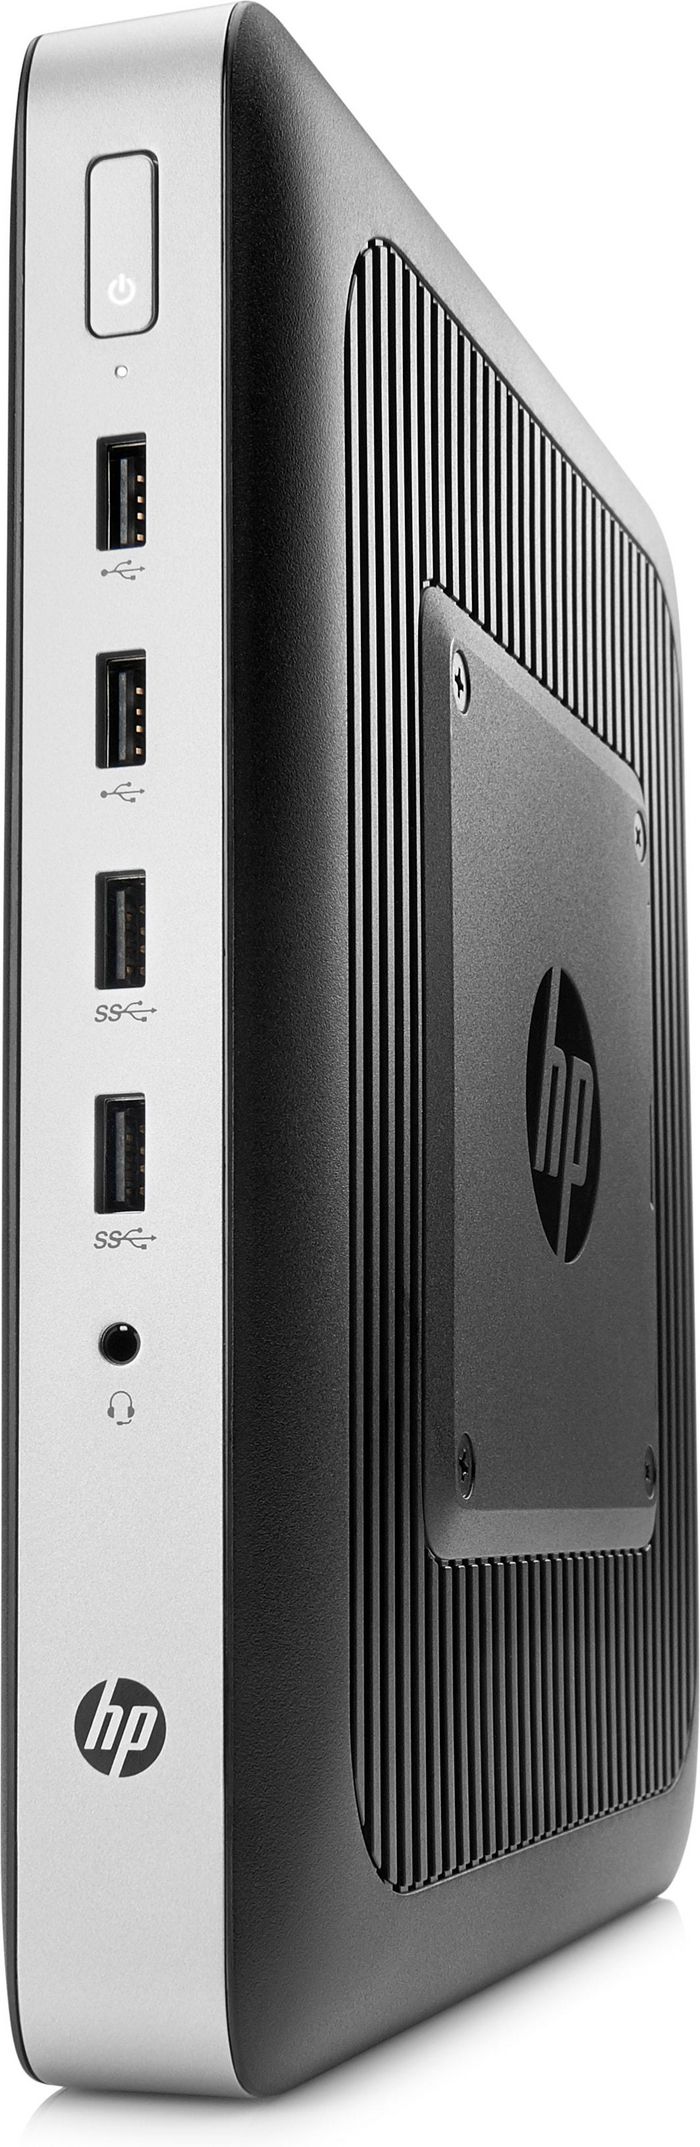 HP T630 2 Ghz Windows Embedded Standard 7E 1.52 Kg Silver, Black Gx-420Gi - W128289297